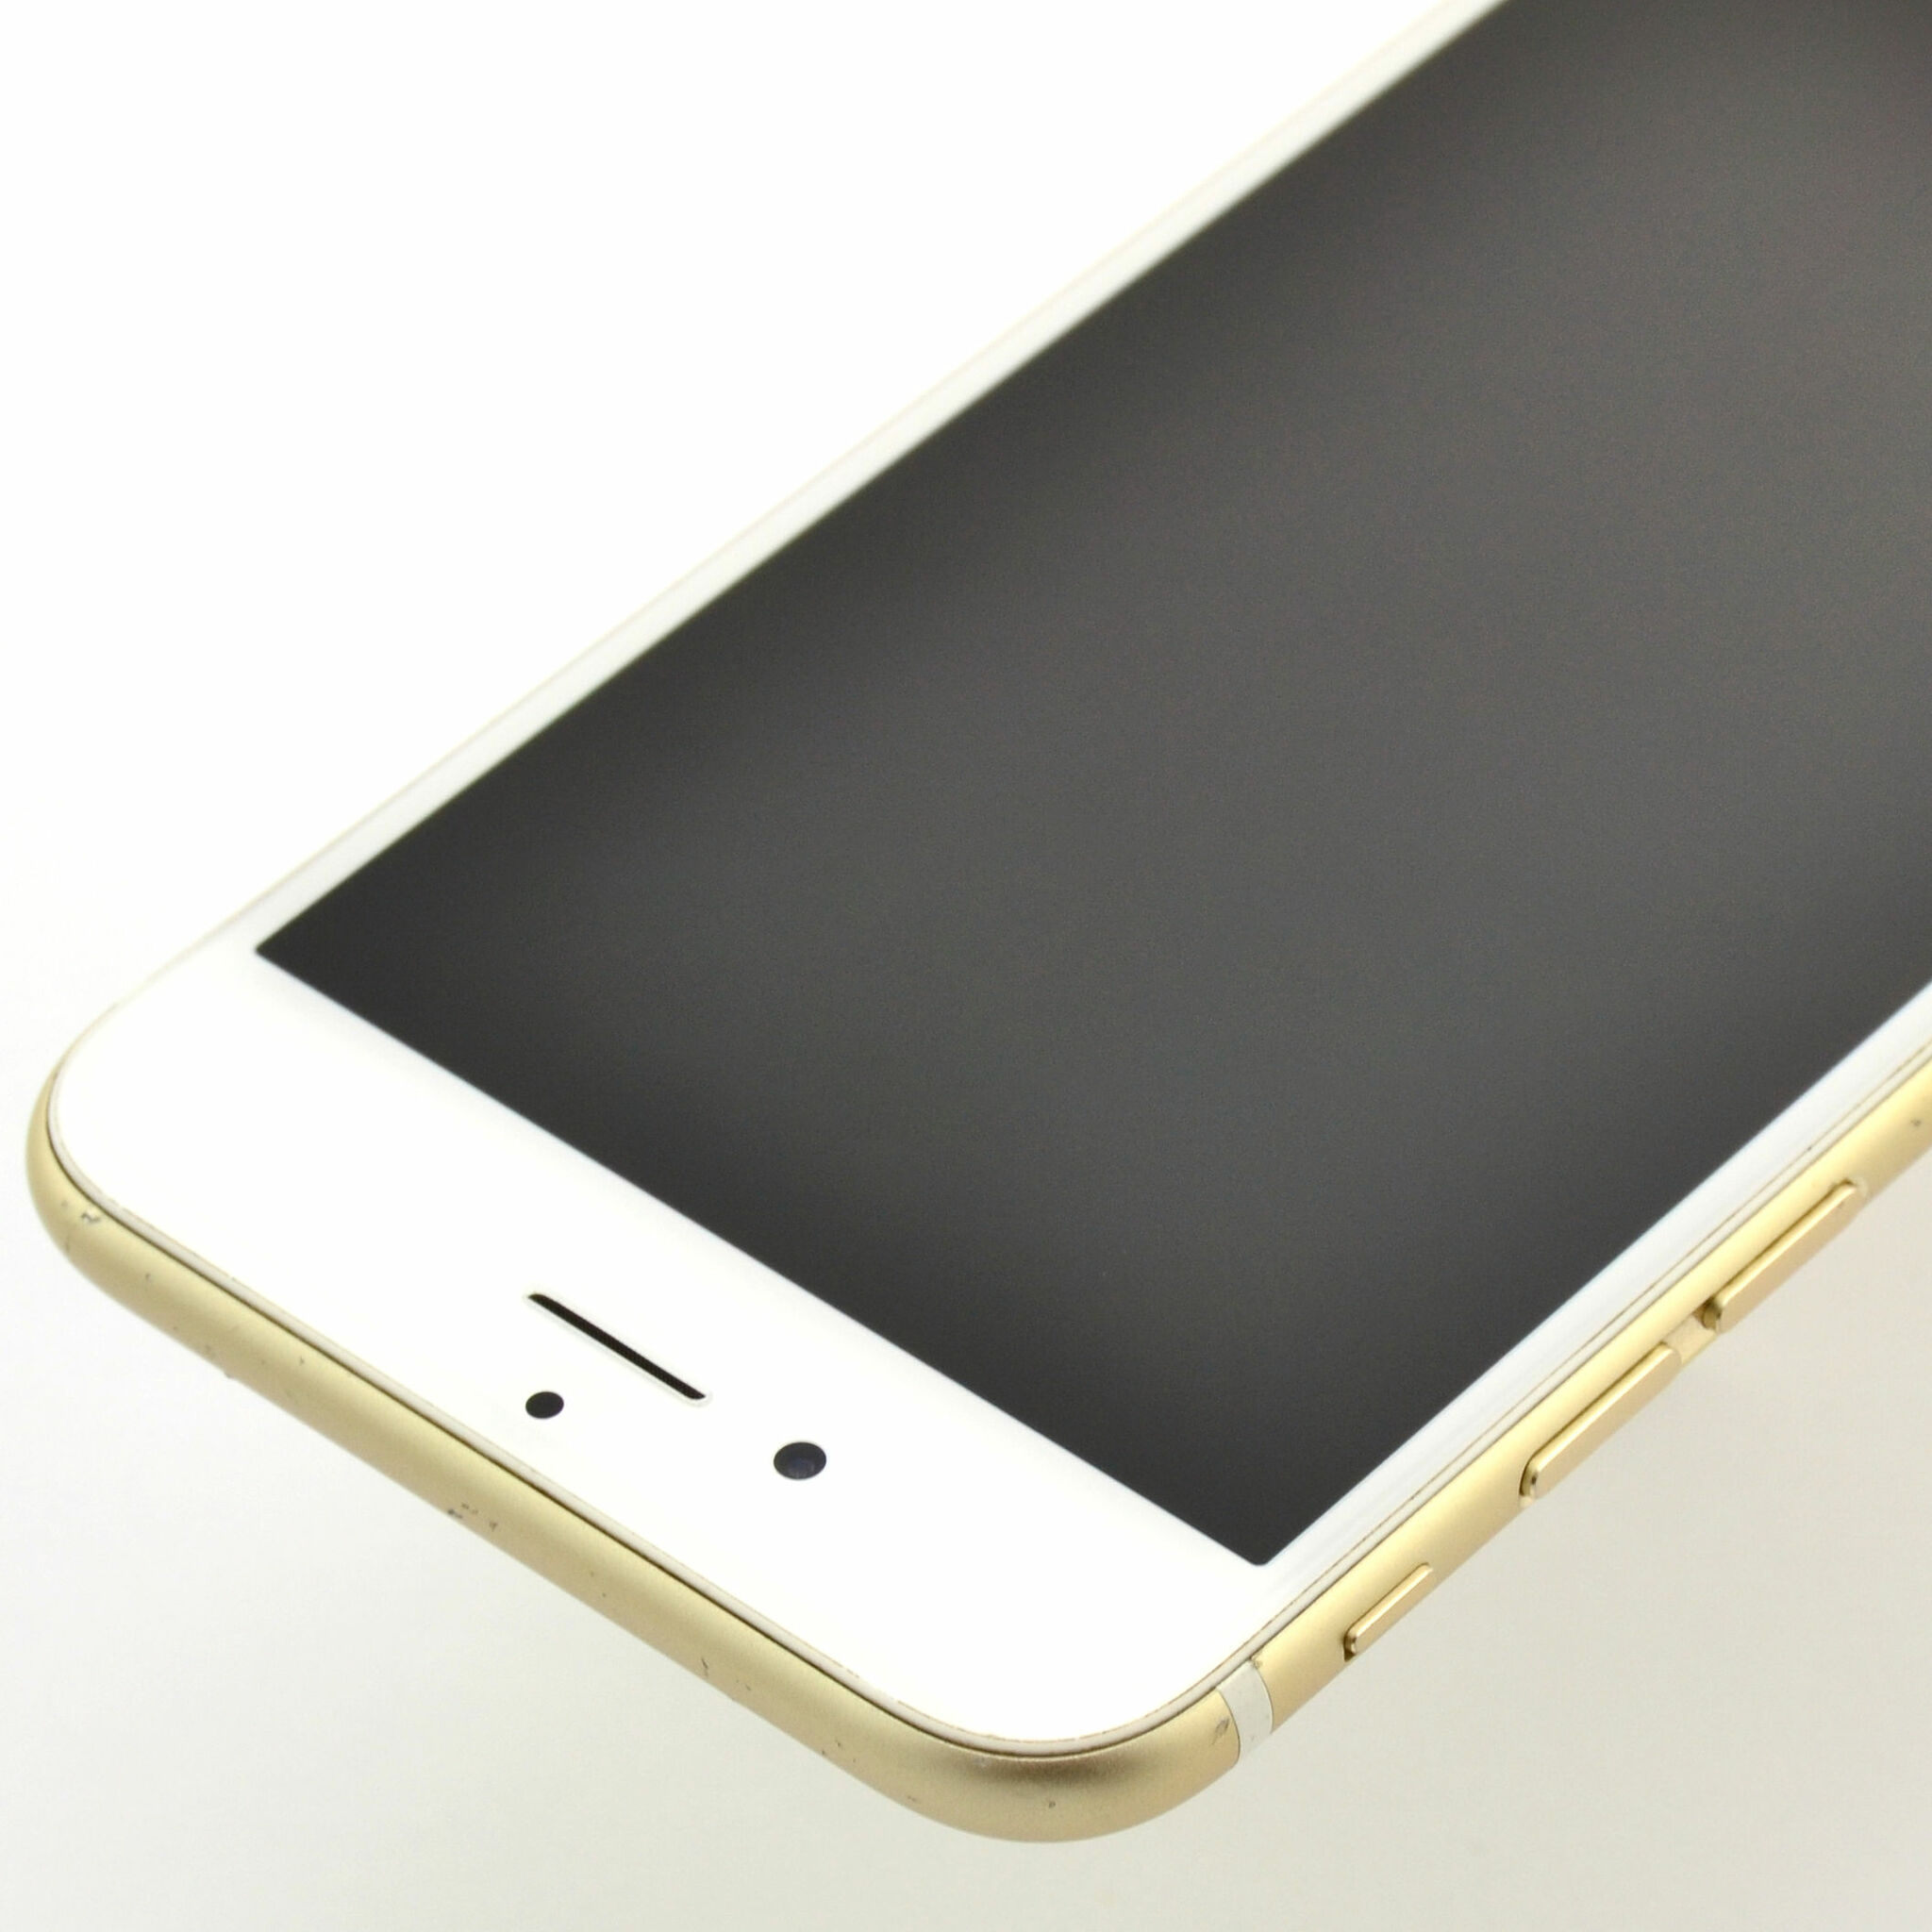 Apple iPhone 6S 16GB Guld - BEG - GOTT SKICK - OLÅST